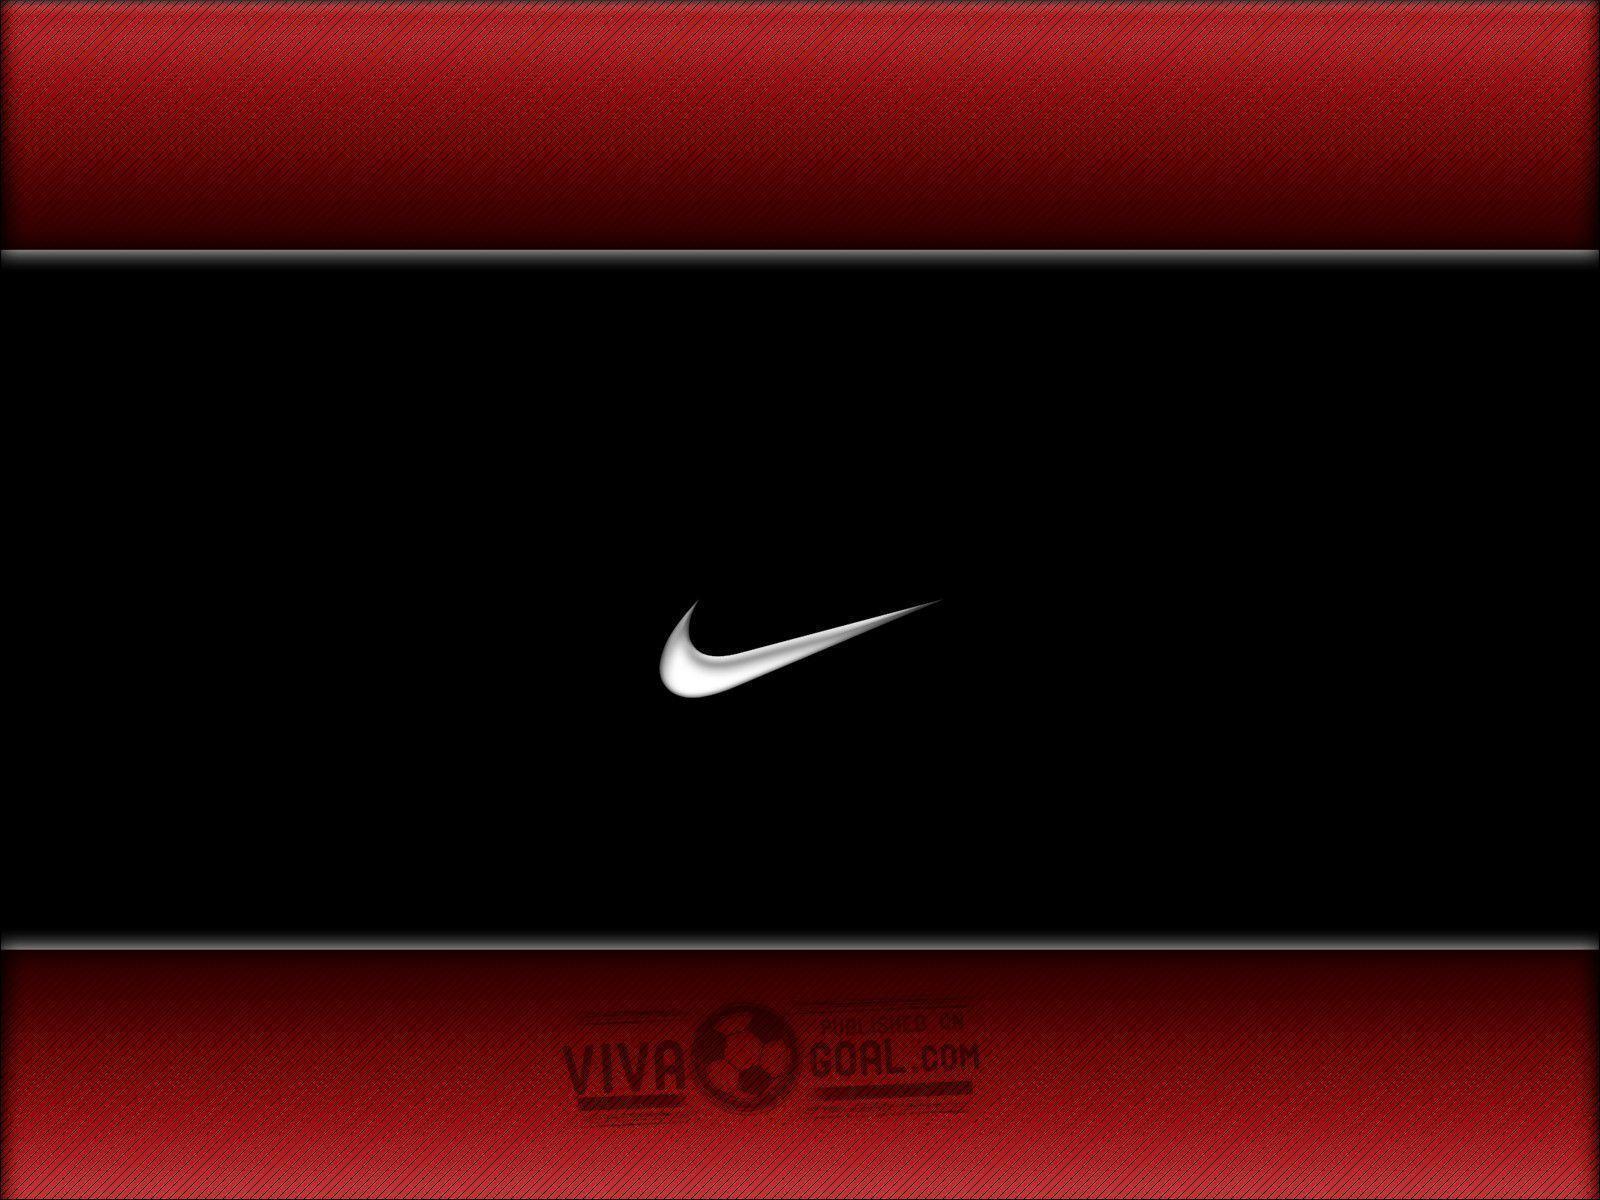 Nike Football Mac Desktop Wallpapers Hd